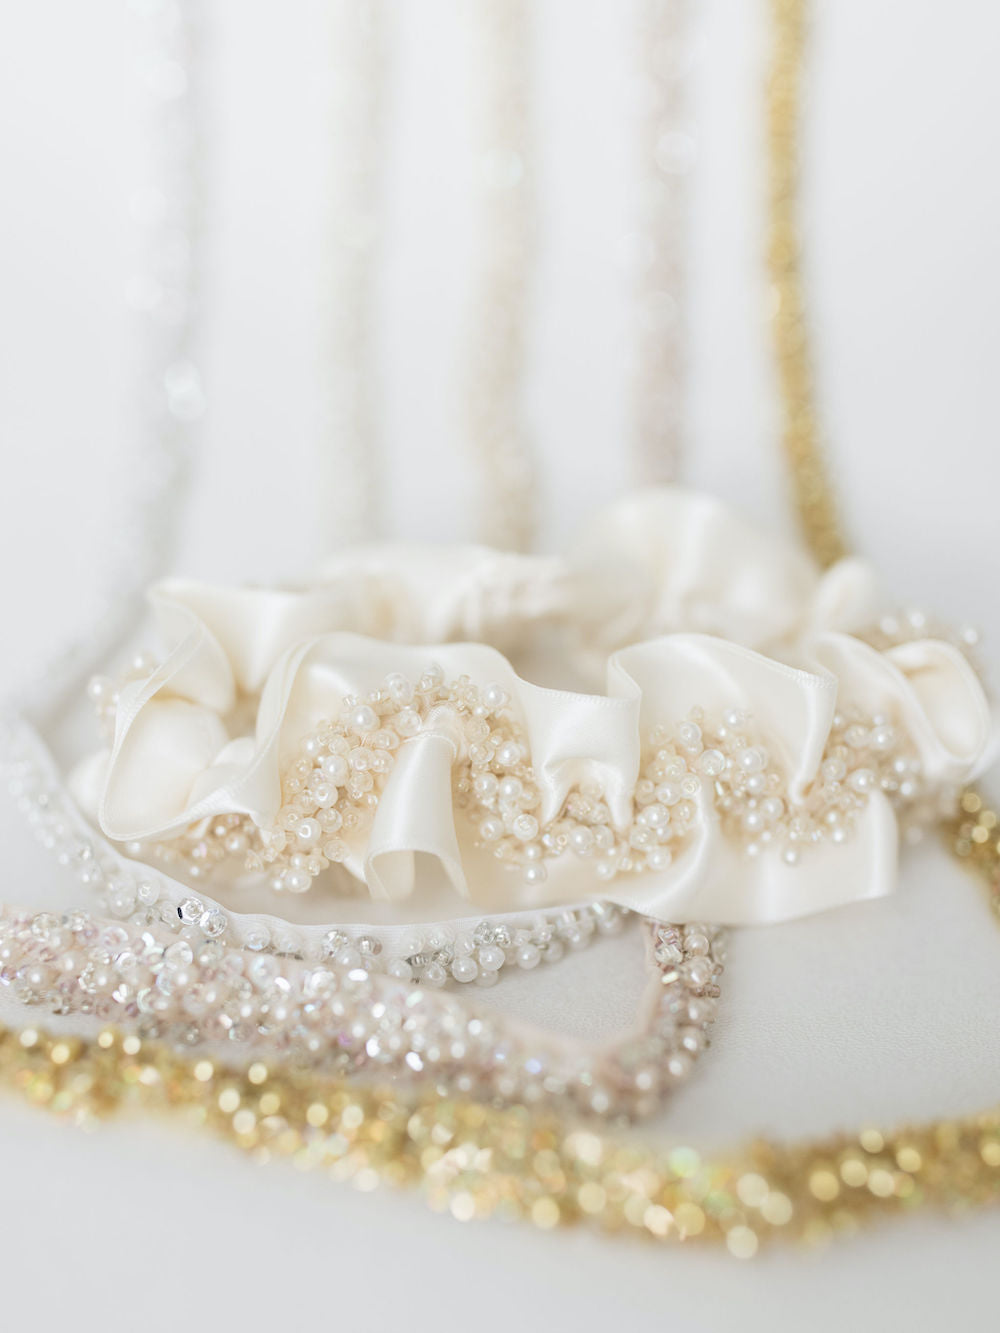 ultimate luxury wedding garter set with sparkles, pearls & beads handmade by expert garter designer The Garter Girl